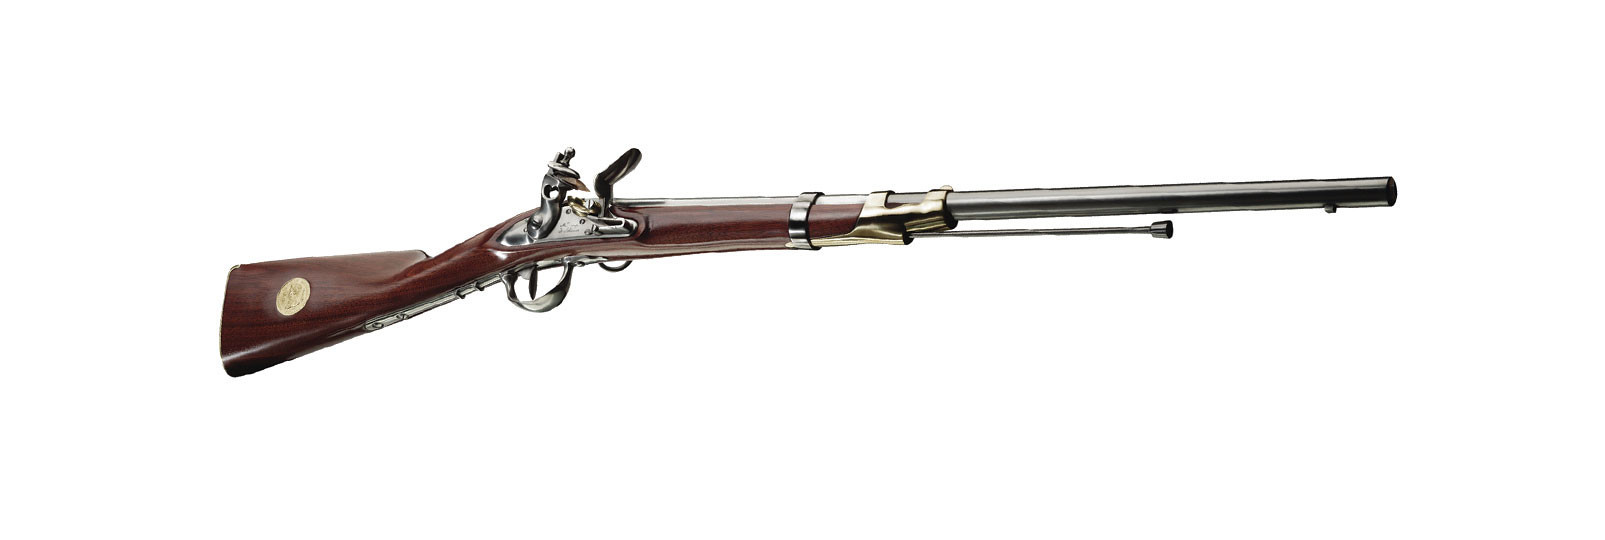 Ussaro 1786 "commemorative" Rifle